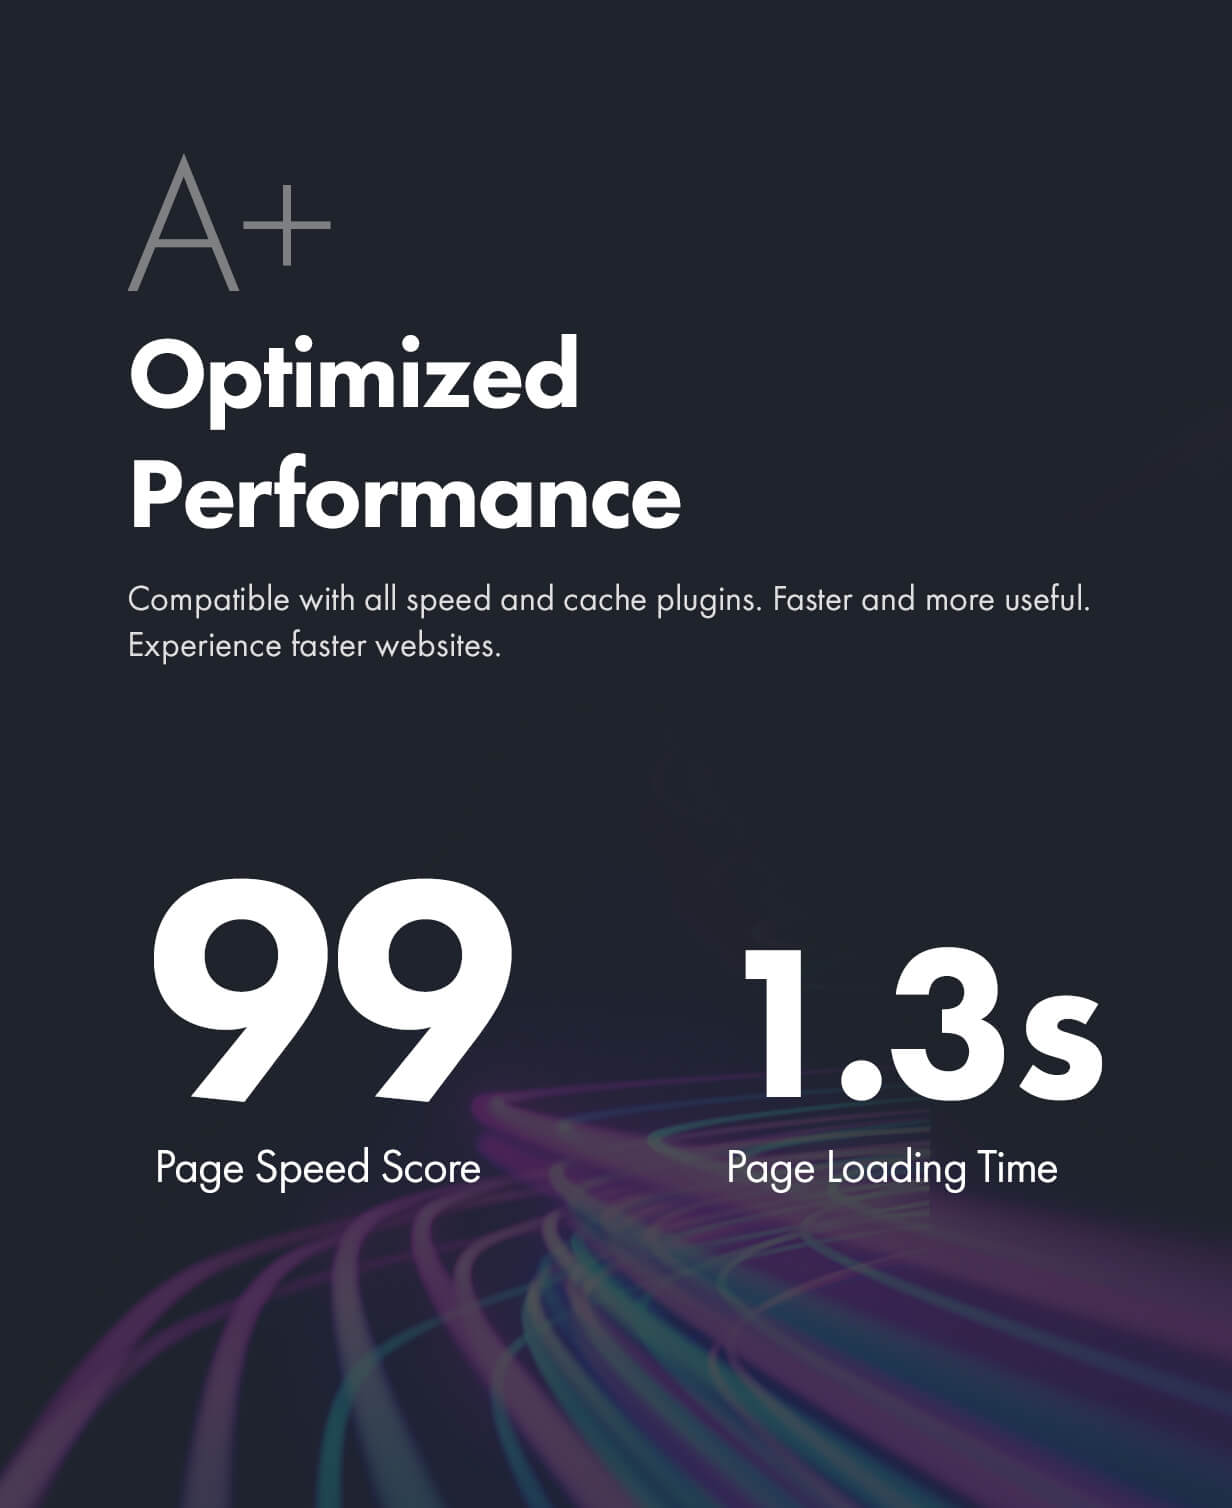 Optimized performance